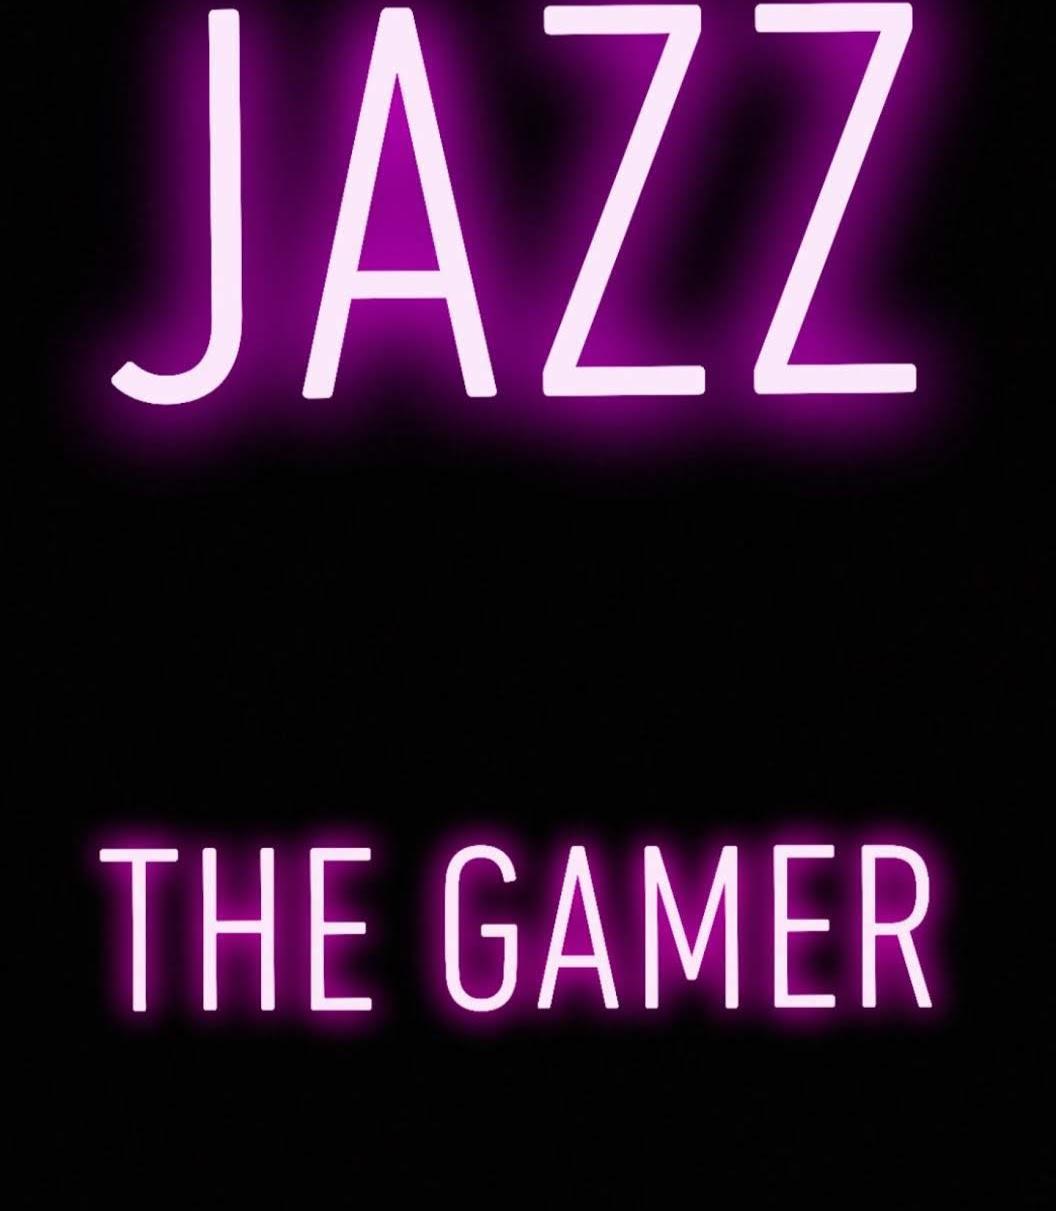 Jazz The gamer